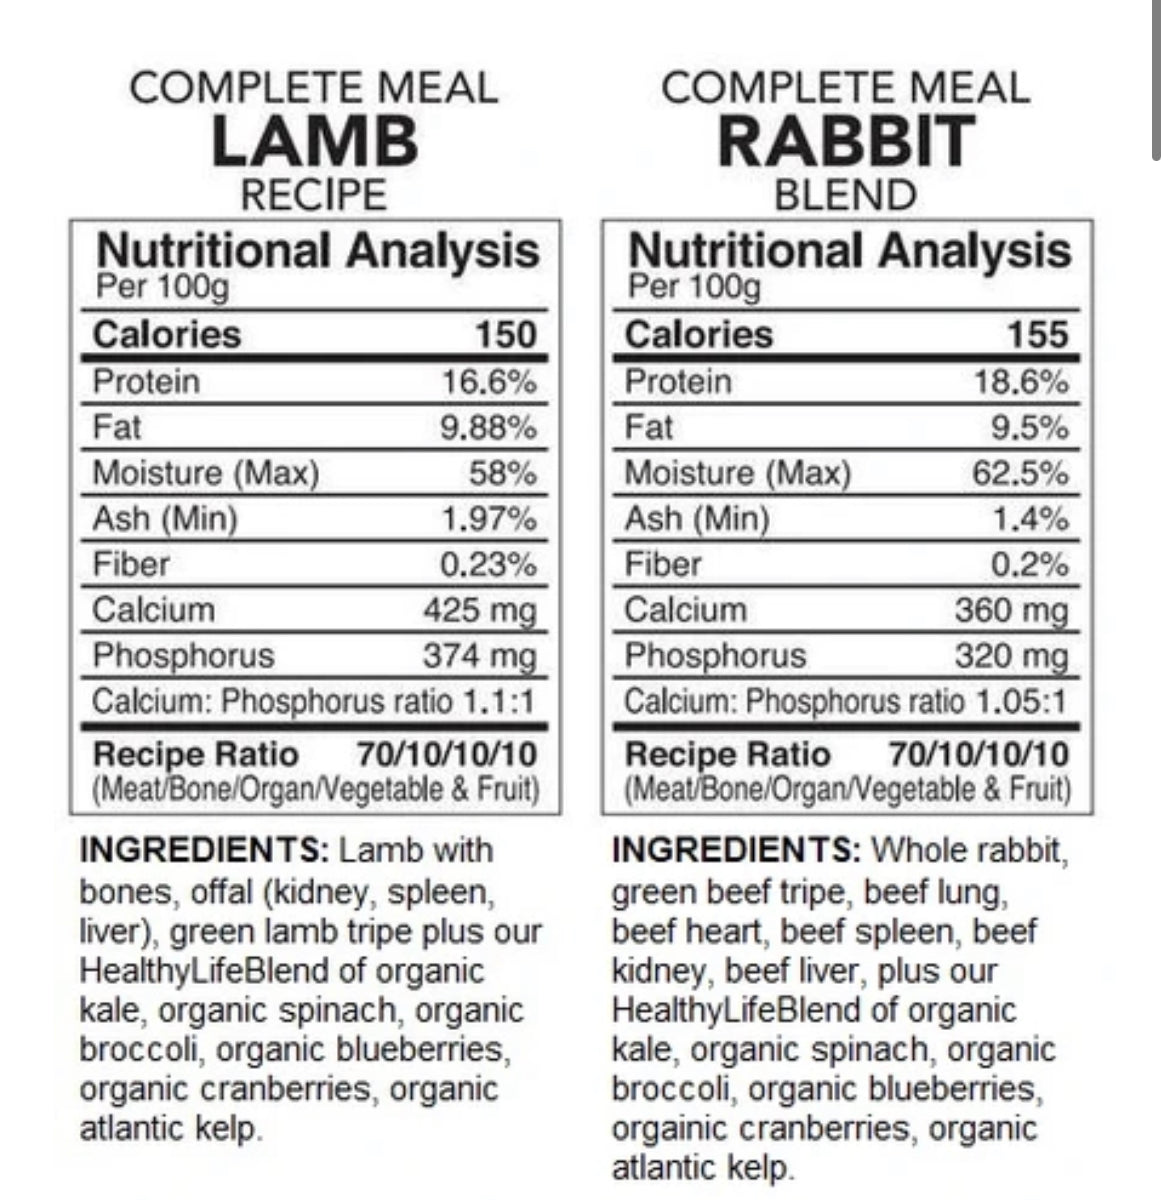 Back2Raw Lamb/Rabbit Combo 12lb Box